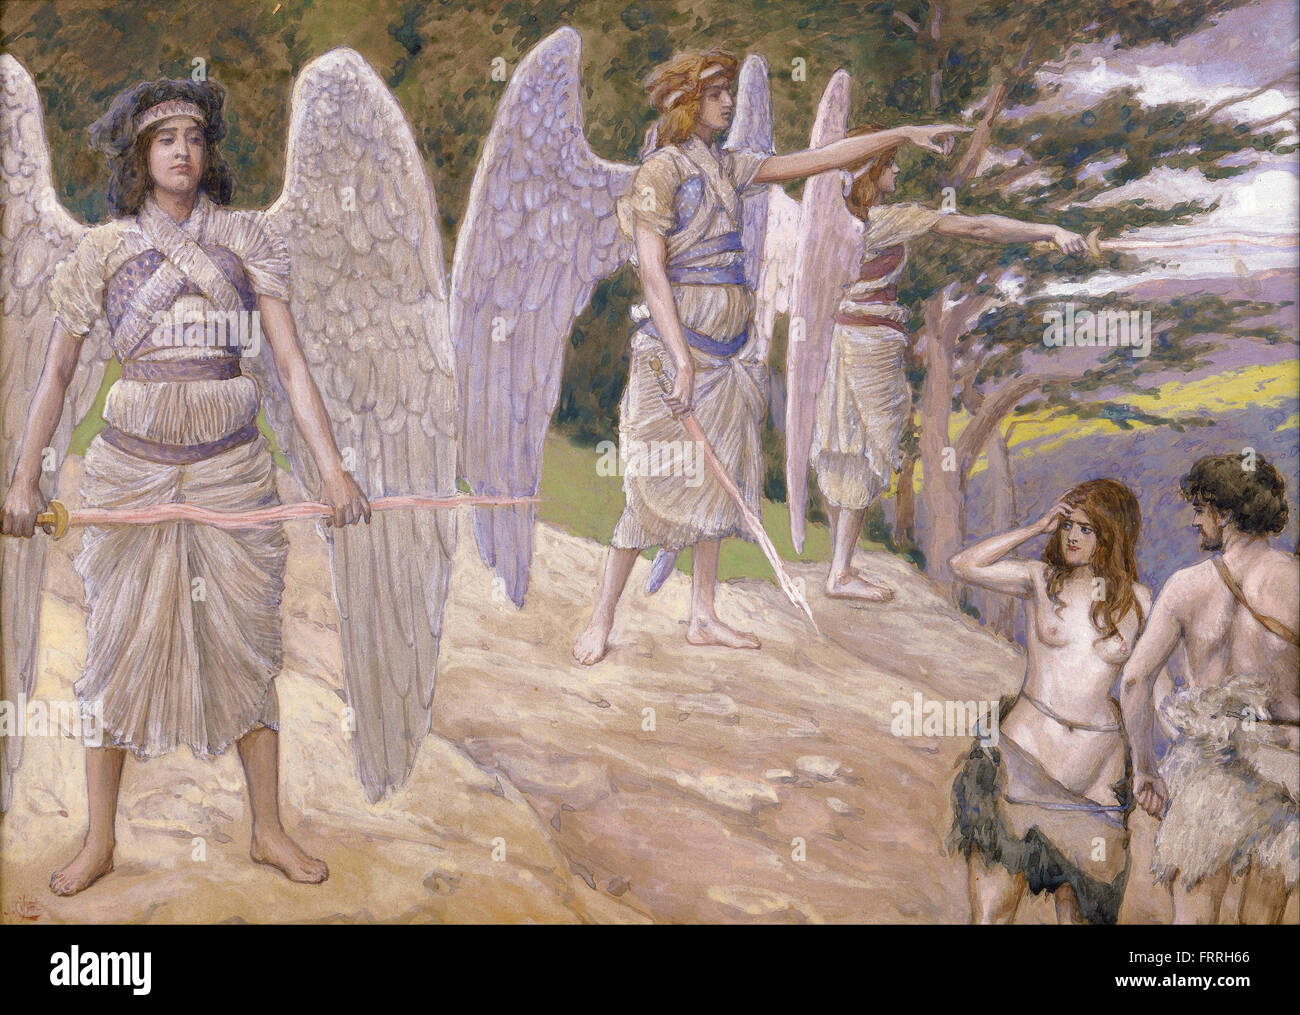 James Jacques Joseph-Tissot - Adam und Eva aus dem Paradies vertrieben Stockfoto